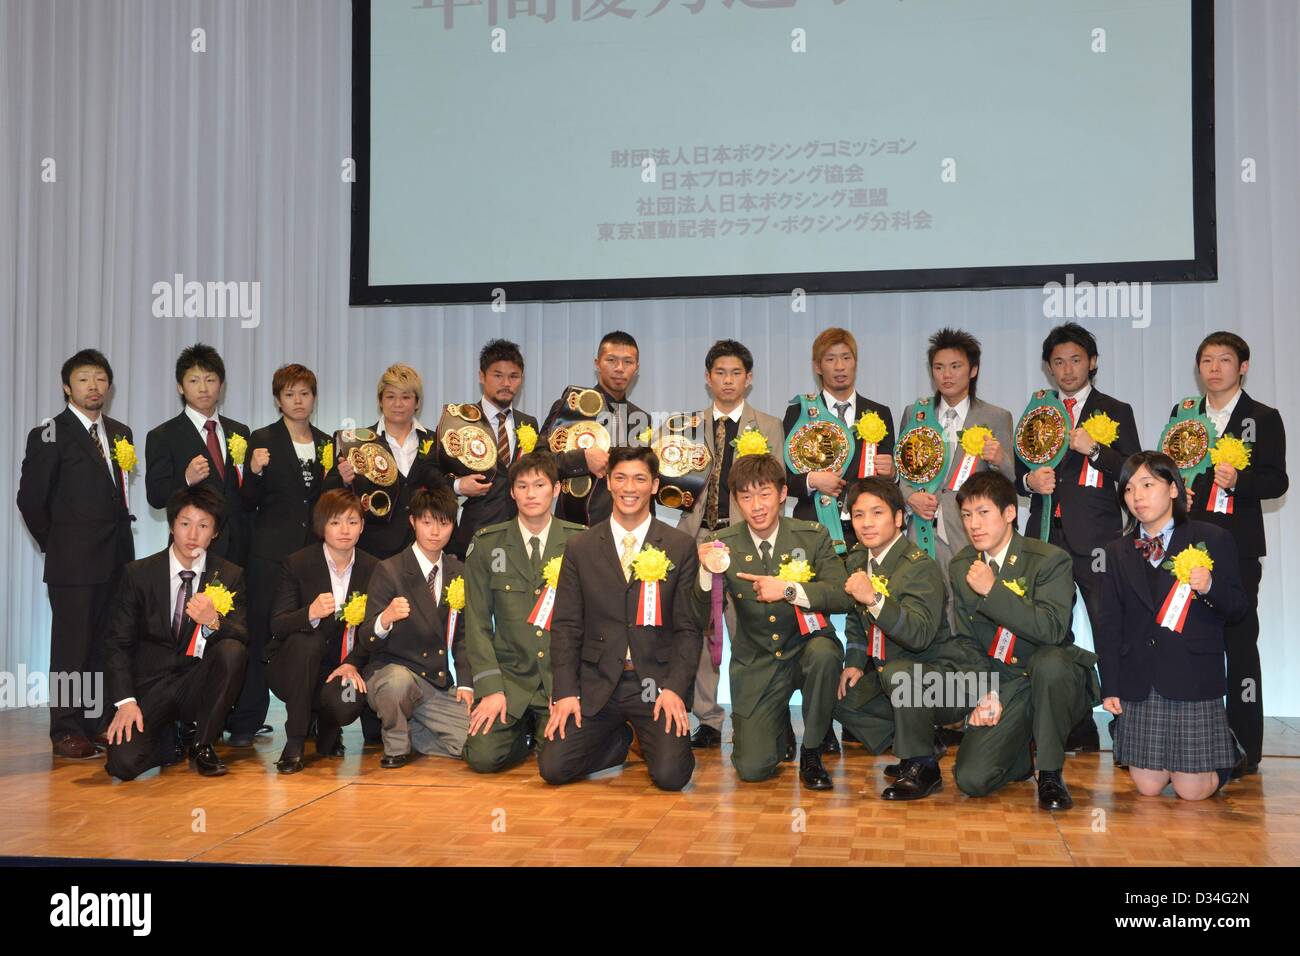 Prize winners, JANUARY 25, 2013 - Boxing : Japan's Boxer of the Year Award 2012 at Tokyo Dome Hotel in Tokyo, Japan. (Photo by Hiroaki Yamaguchi/AFLO)<br>(Top row <> - L to R)<br>Akira Yaegashi ()<br>Naoya Inoue <br>Tsunami Tenkai ()<br>Naoko Yamaguchi ()<br>Kohei Kono <br>Takashi Uchiyama <br>Kazuto Ioka () ()<br>Yota Sato <br>Toshiyuki Igarashi <br>Shinsuke Yamanaka  KO<br>Momo Koseki ()<br><br>(Bottom row <> - L to R)<br>Sho Nakazawa <br>Tomoko Kugimiya <br>Madoka Wada <br>Yasuhiro Suzuki <br>Ryota Murata <br>Satoshi Shimizu <br>Katsuaki Susa <br>Daisuke Narimatsu <br>Kasumi Saeki Stock Photo